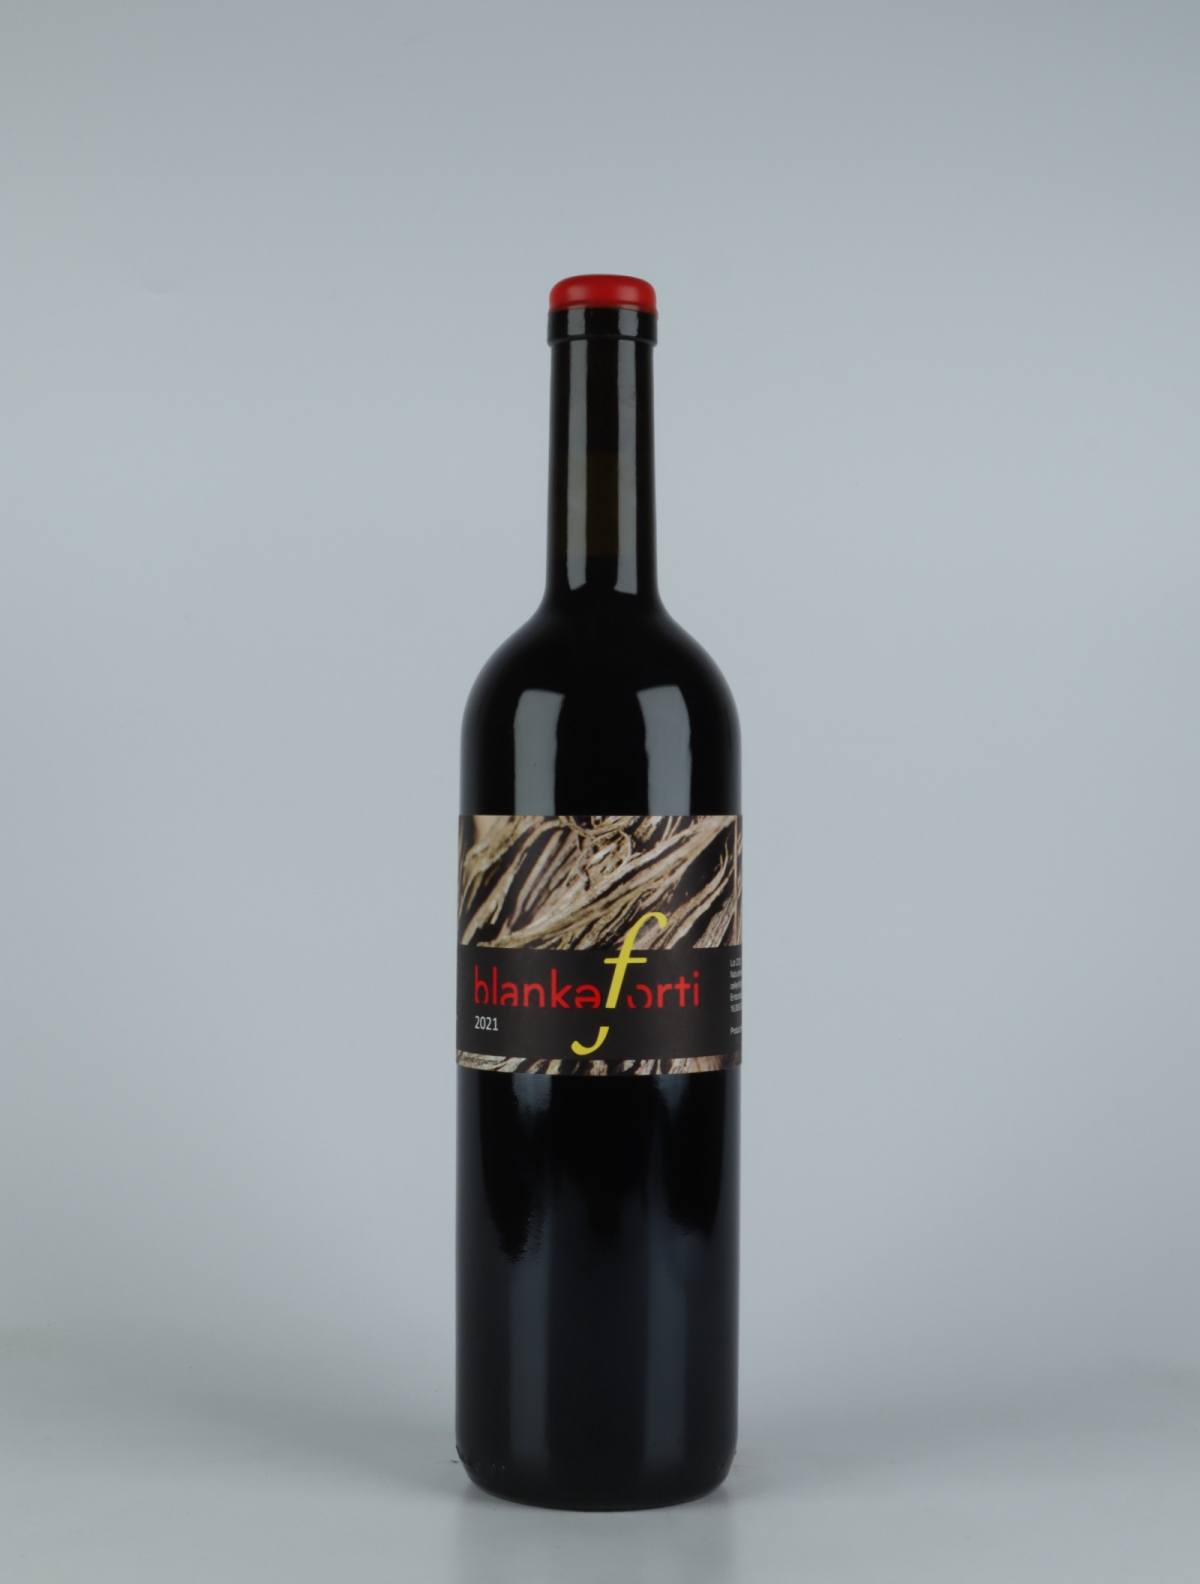 A bottle 2021 Blankaforti Red wine from Jordi Llorens, Catalonia in Spain